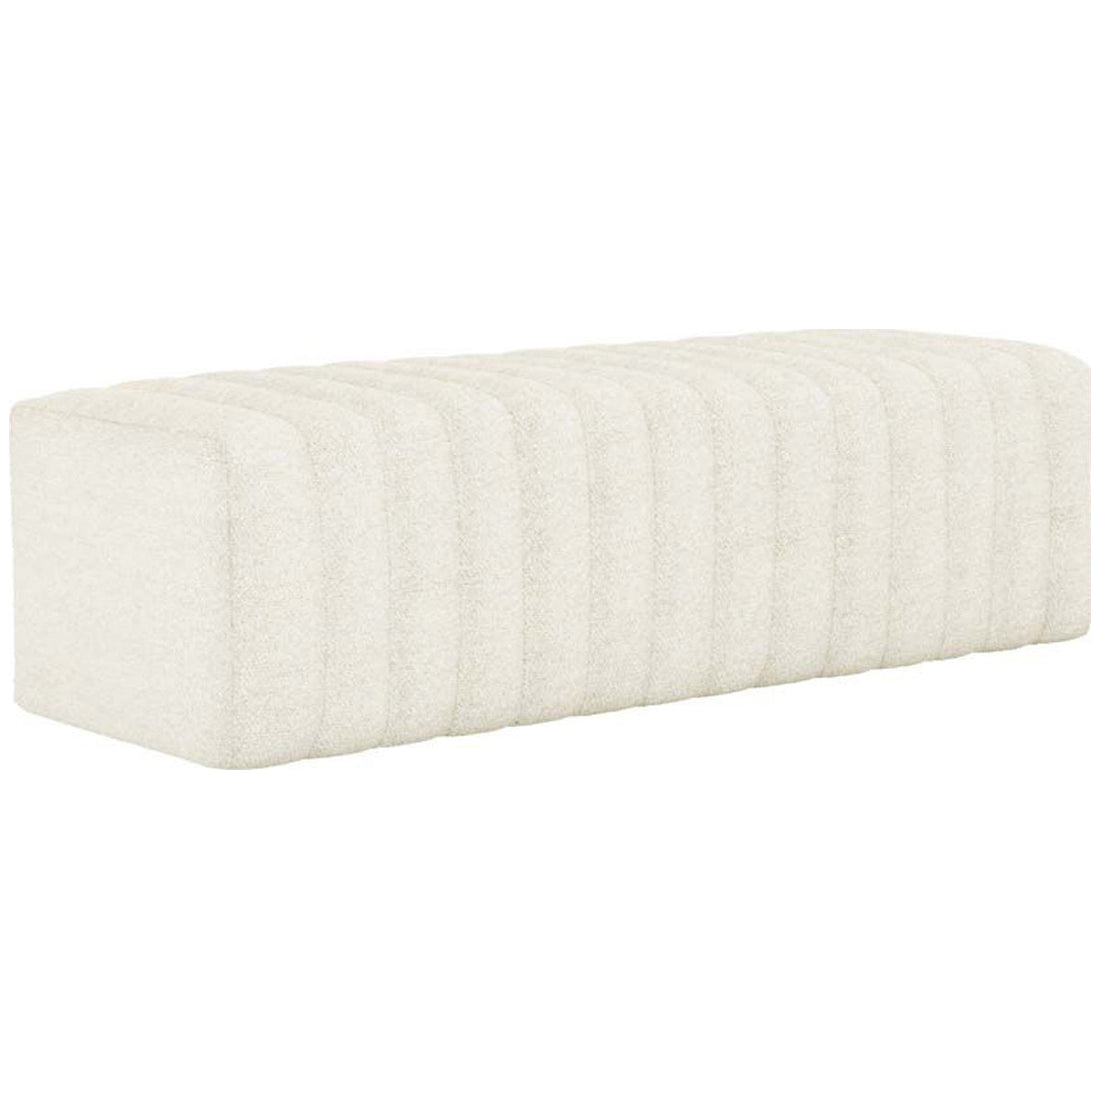 Interlude Home Cleo Bench - Foam